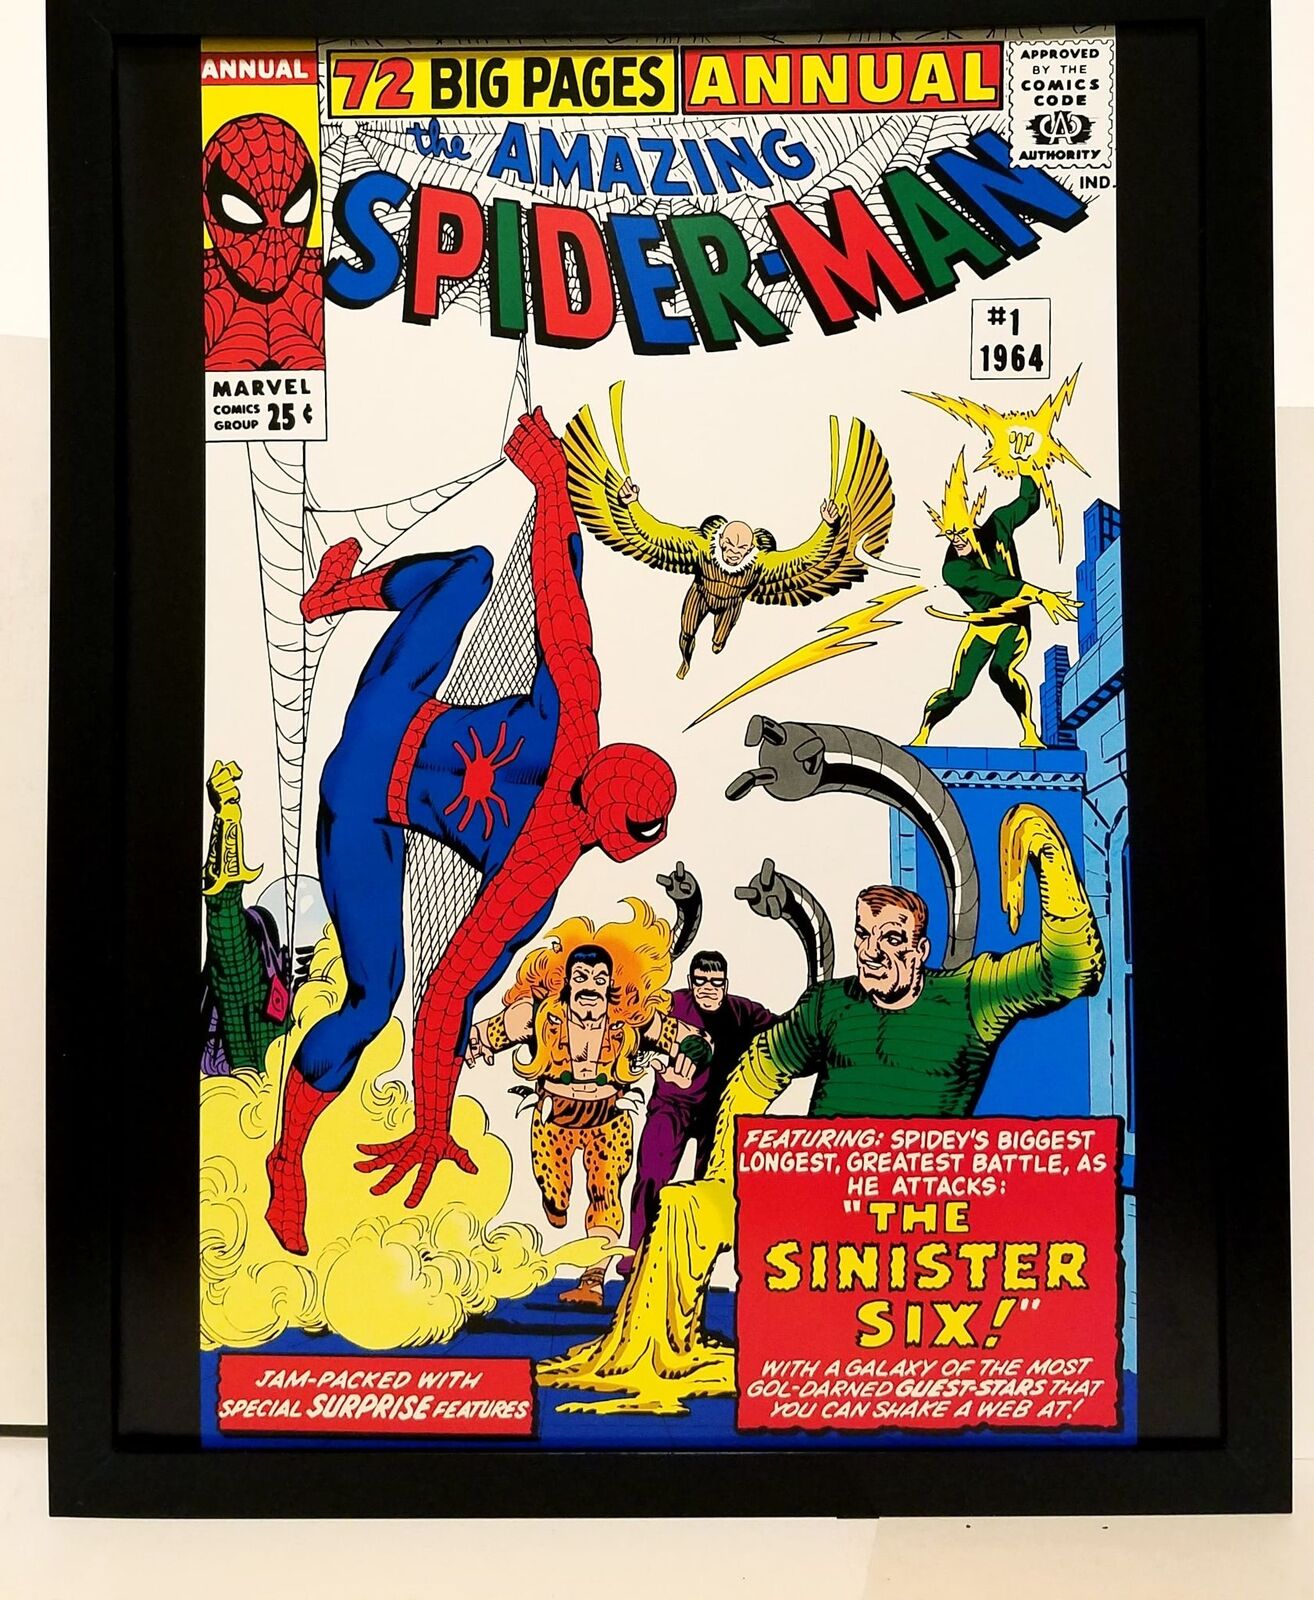 Amazing Spider-Man Annual #1 by Steve Ditko 11x14 FRAMED Marvel Comics Art Print